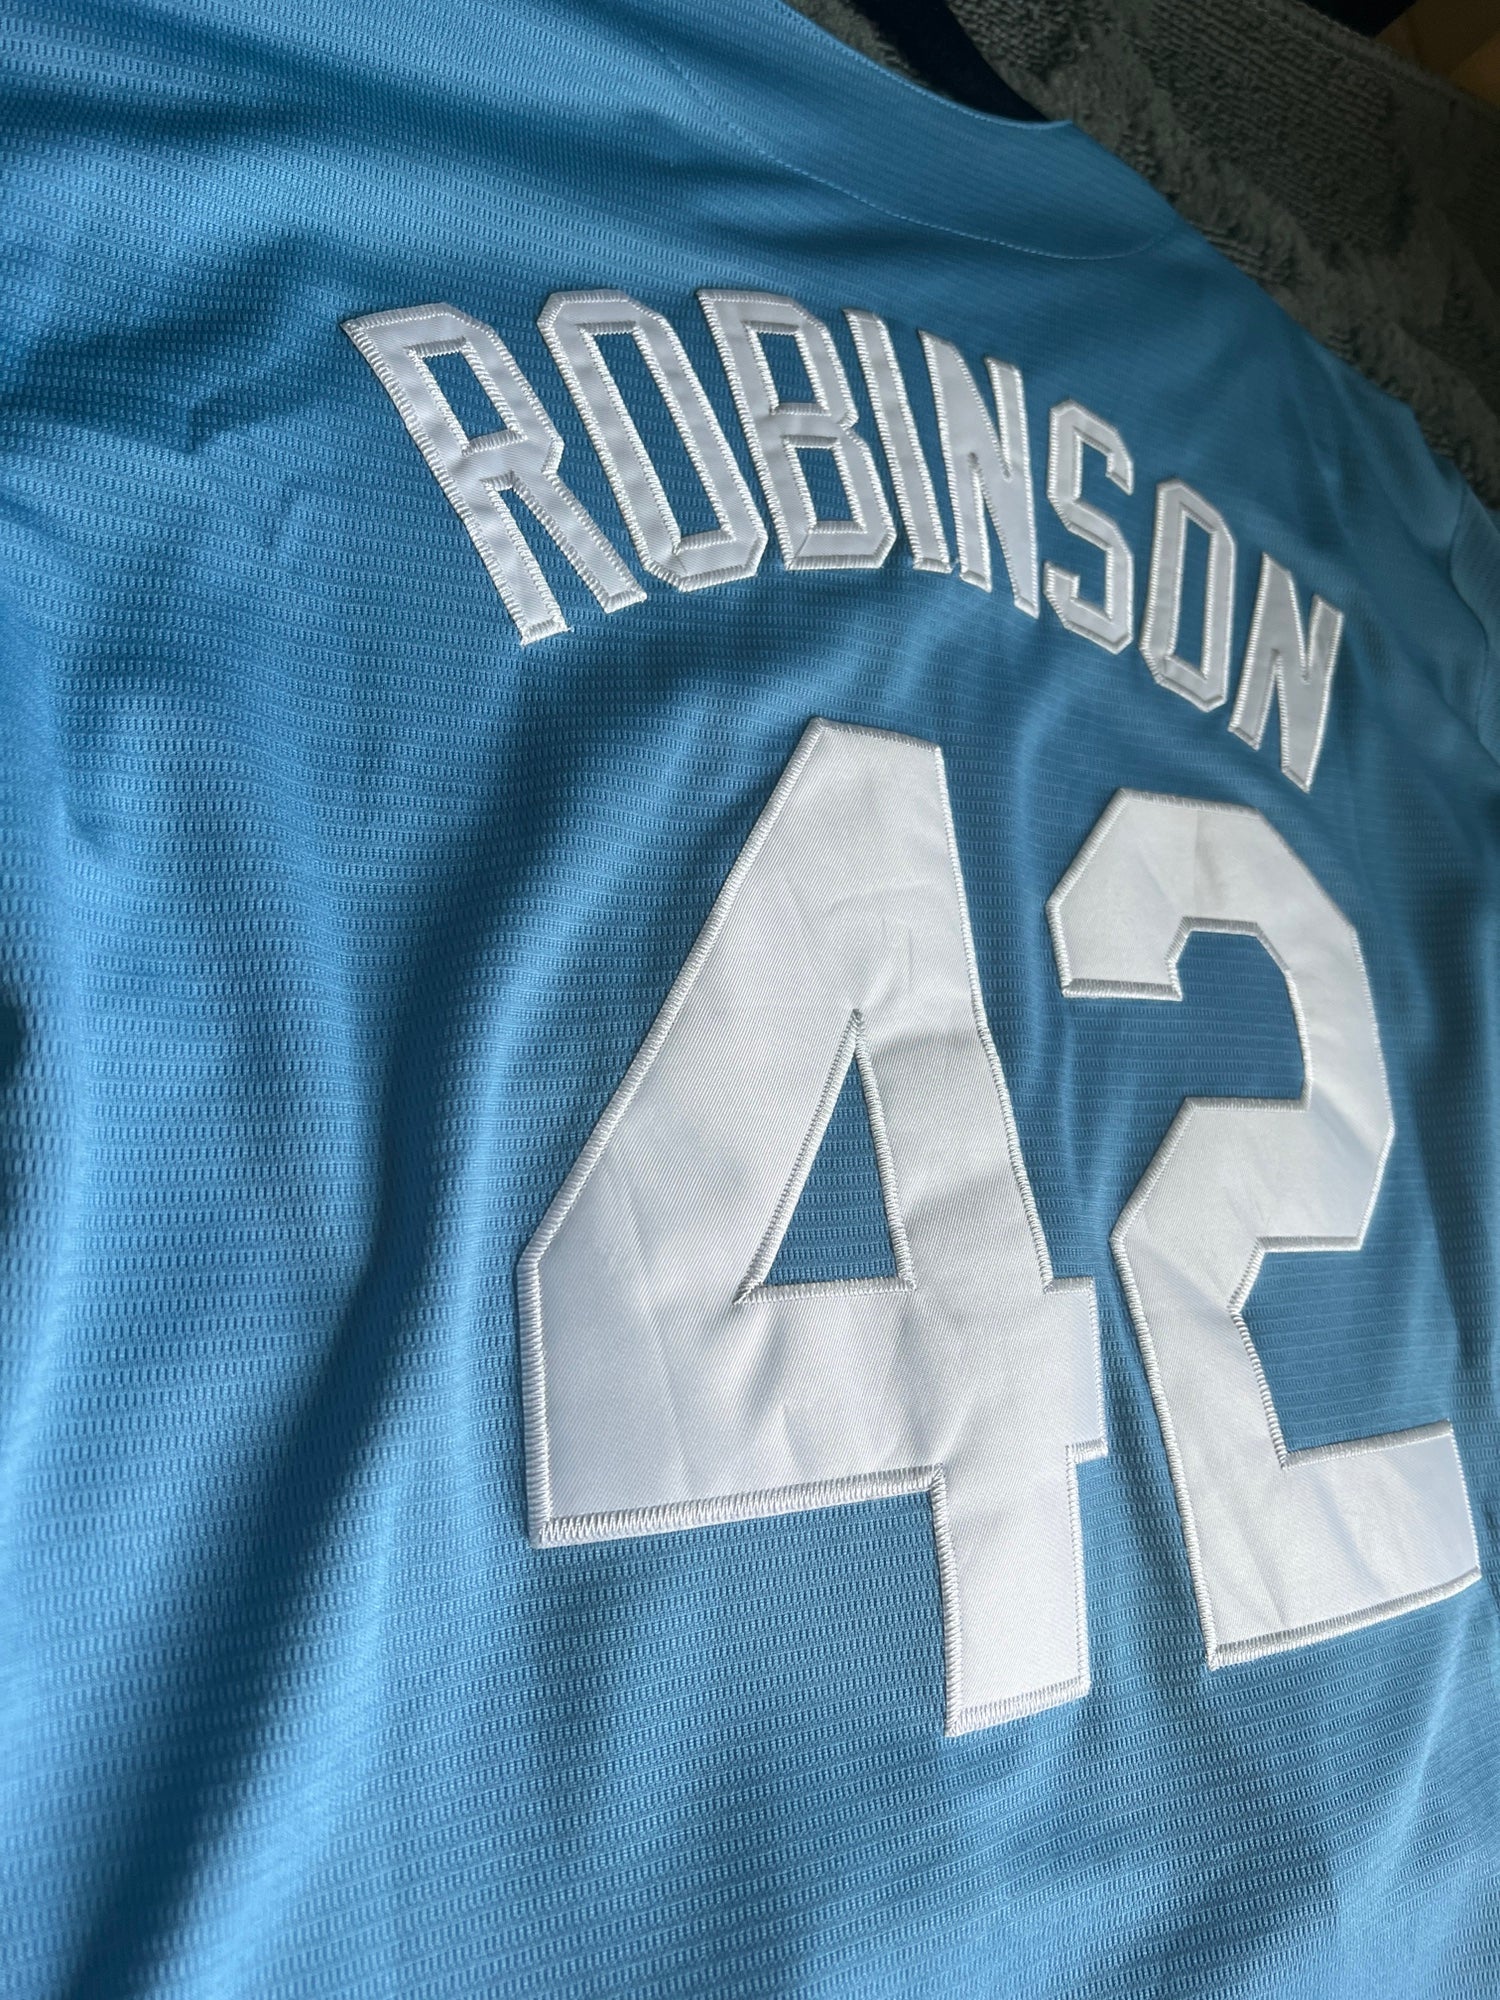 jackie robinson throwback jersey